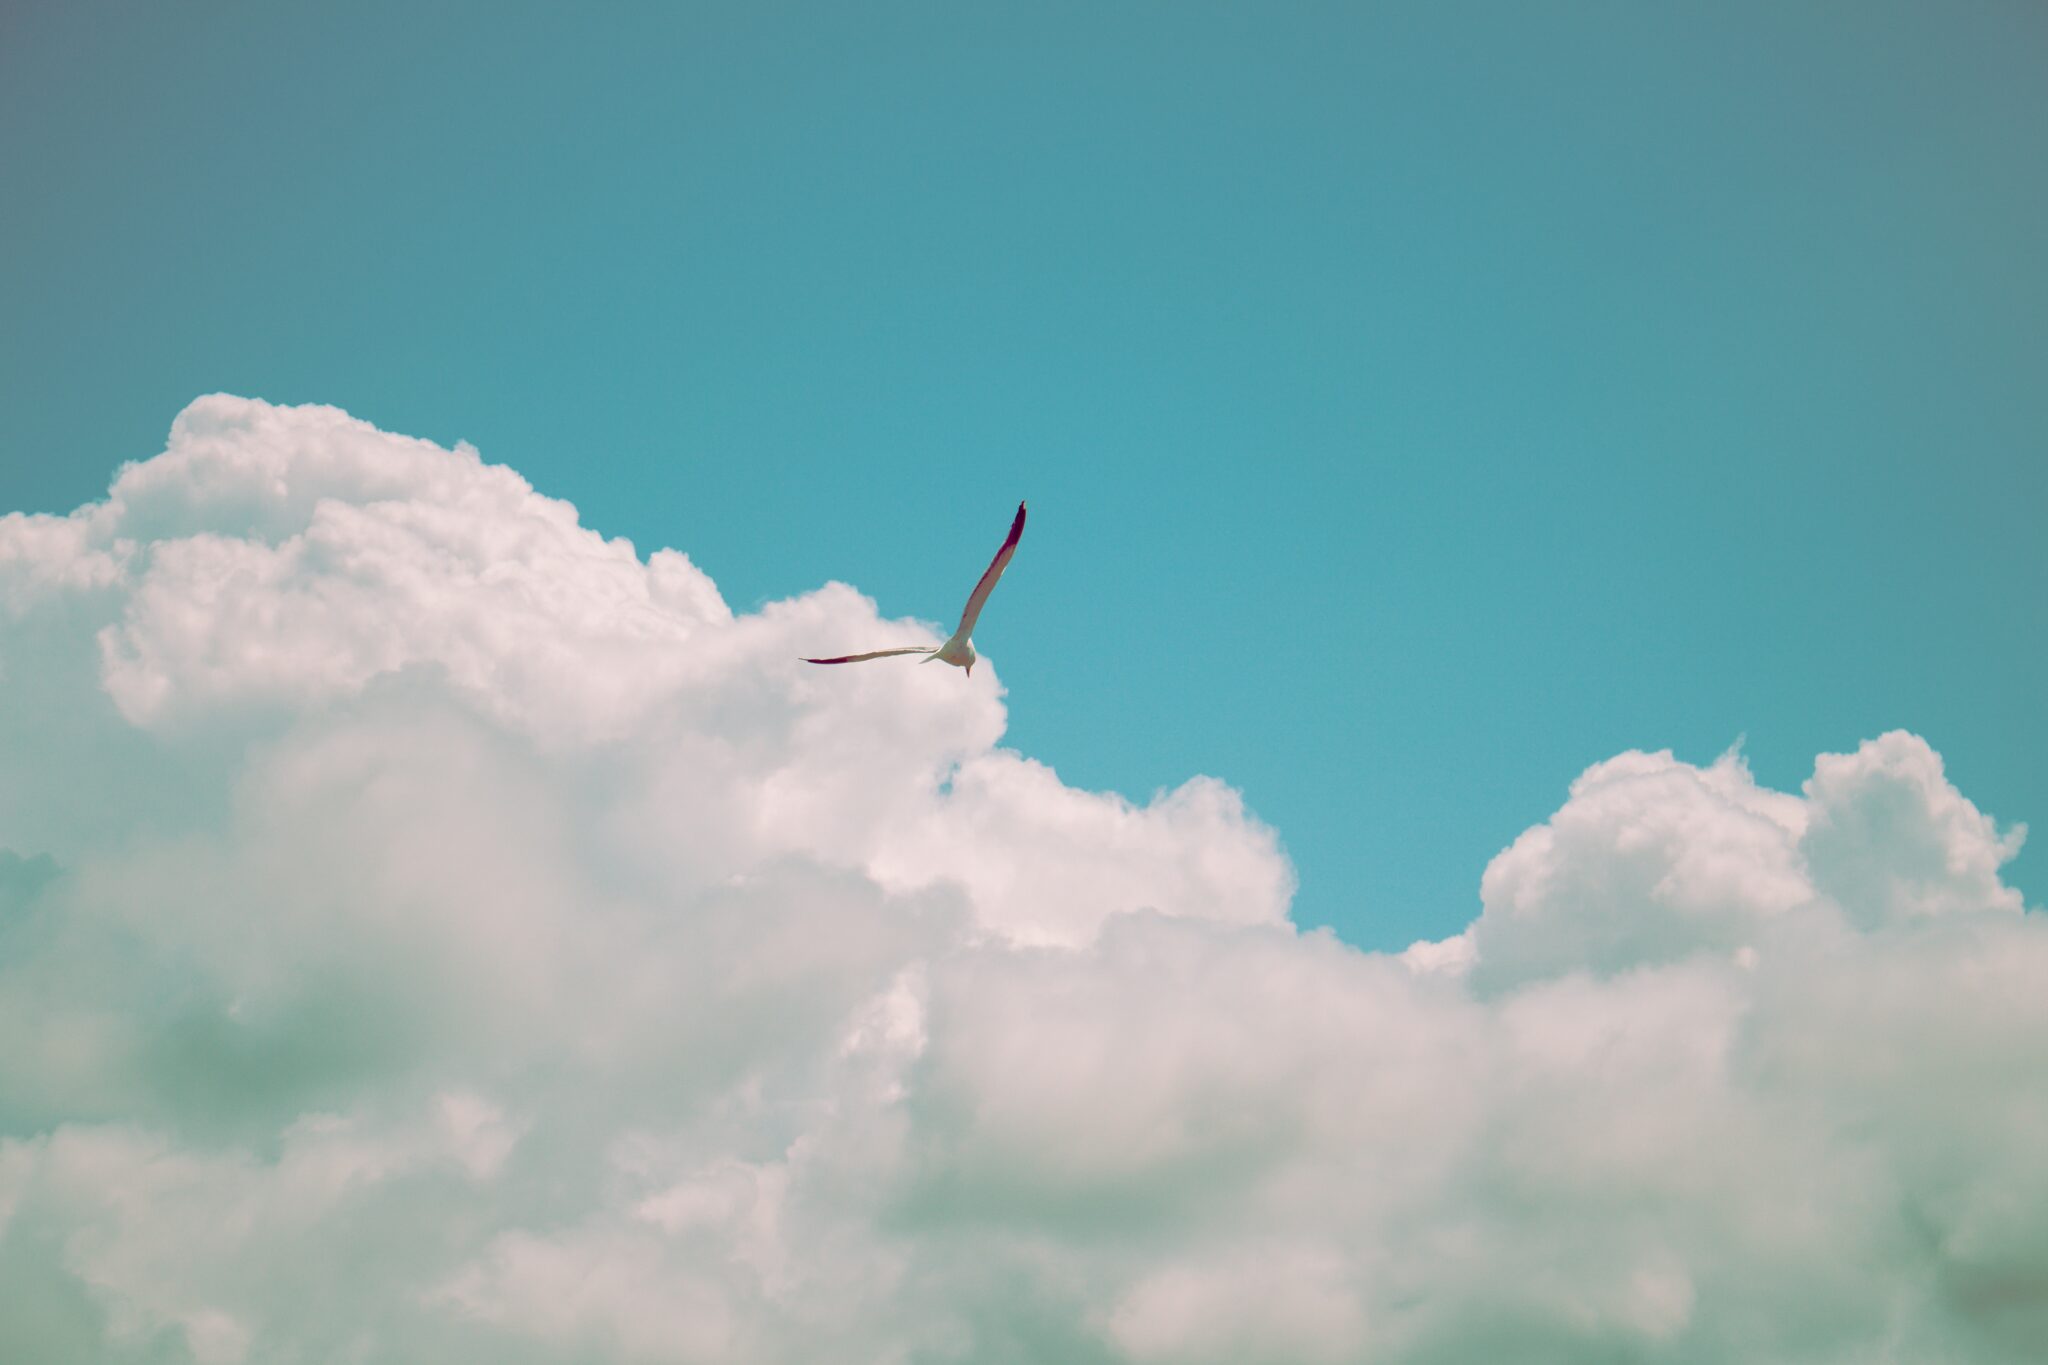 Bird in the sky | Photo by Dallas Reedy on Unsplash